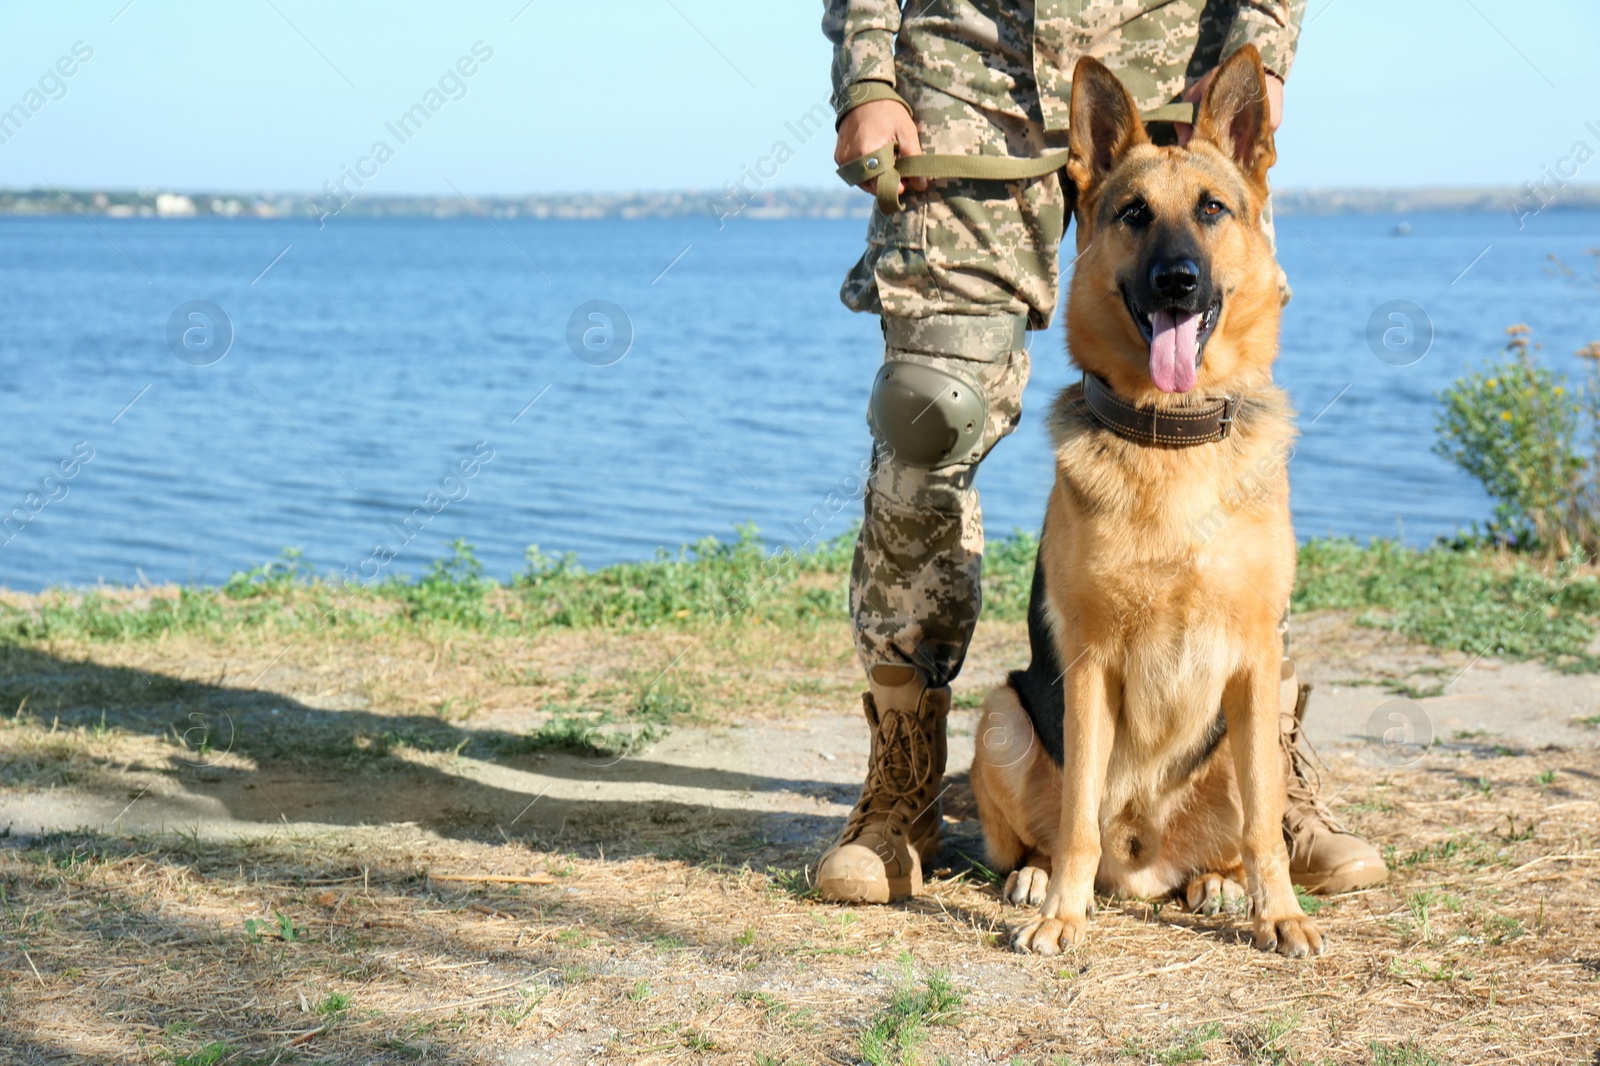 Photo of Man in military uniform with German shepherd dog near river, closeup view